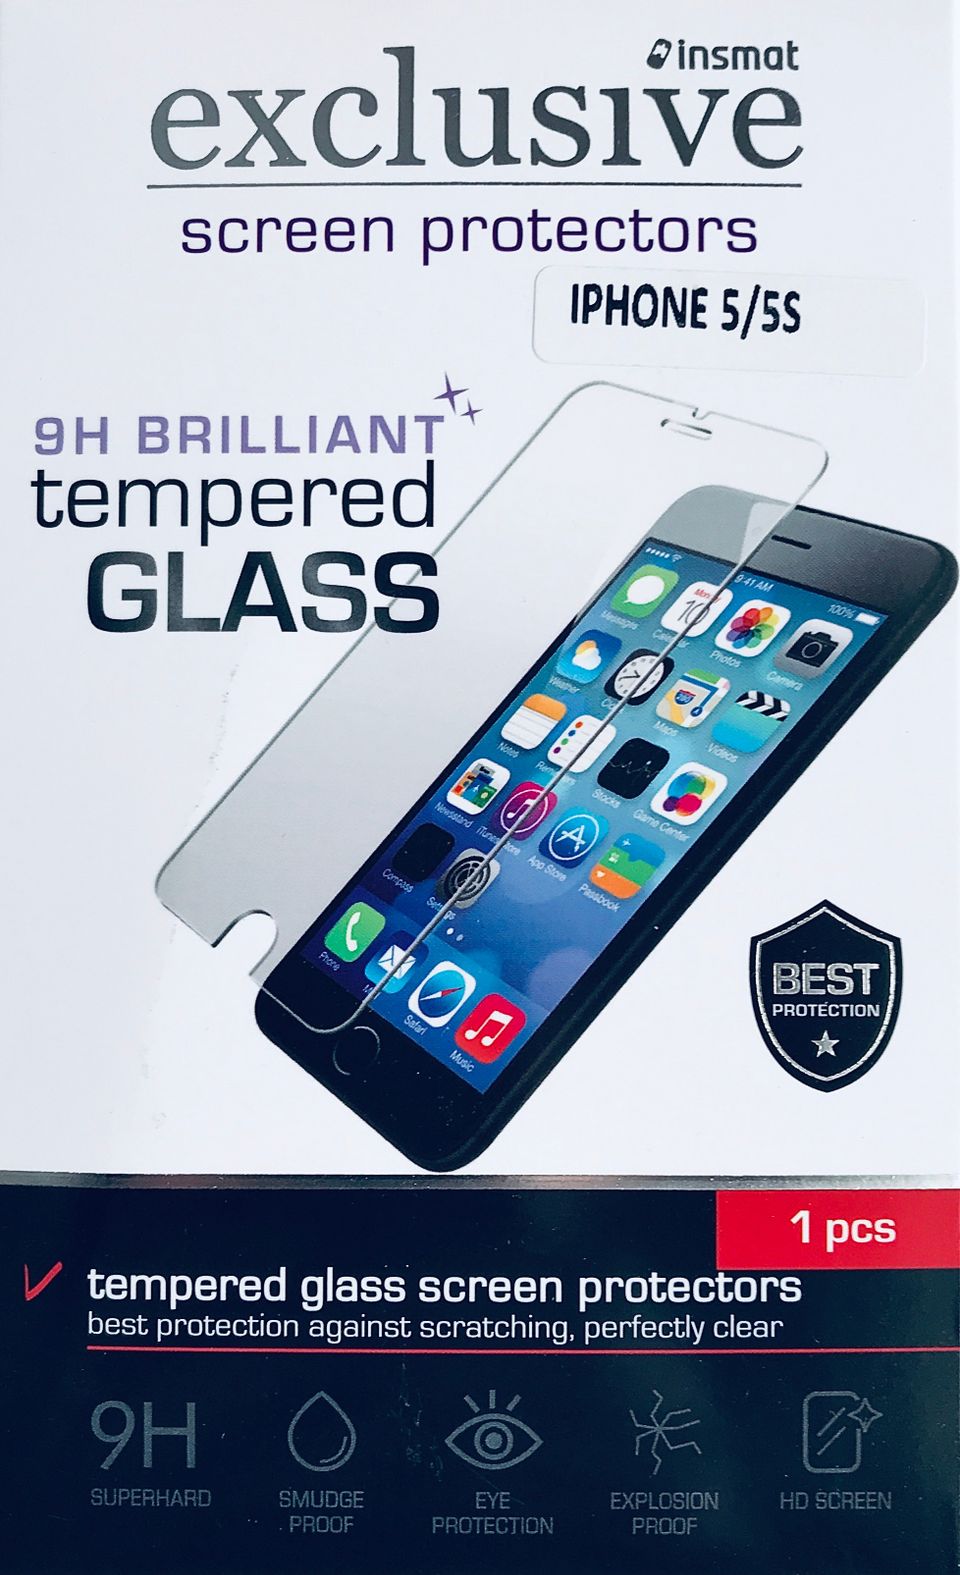 NÄYTÖNSUOJALASI - Apple iPhone 5 / 5S, Insmat Exclusive screen protector